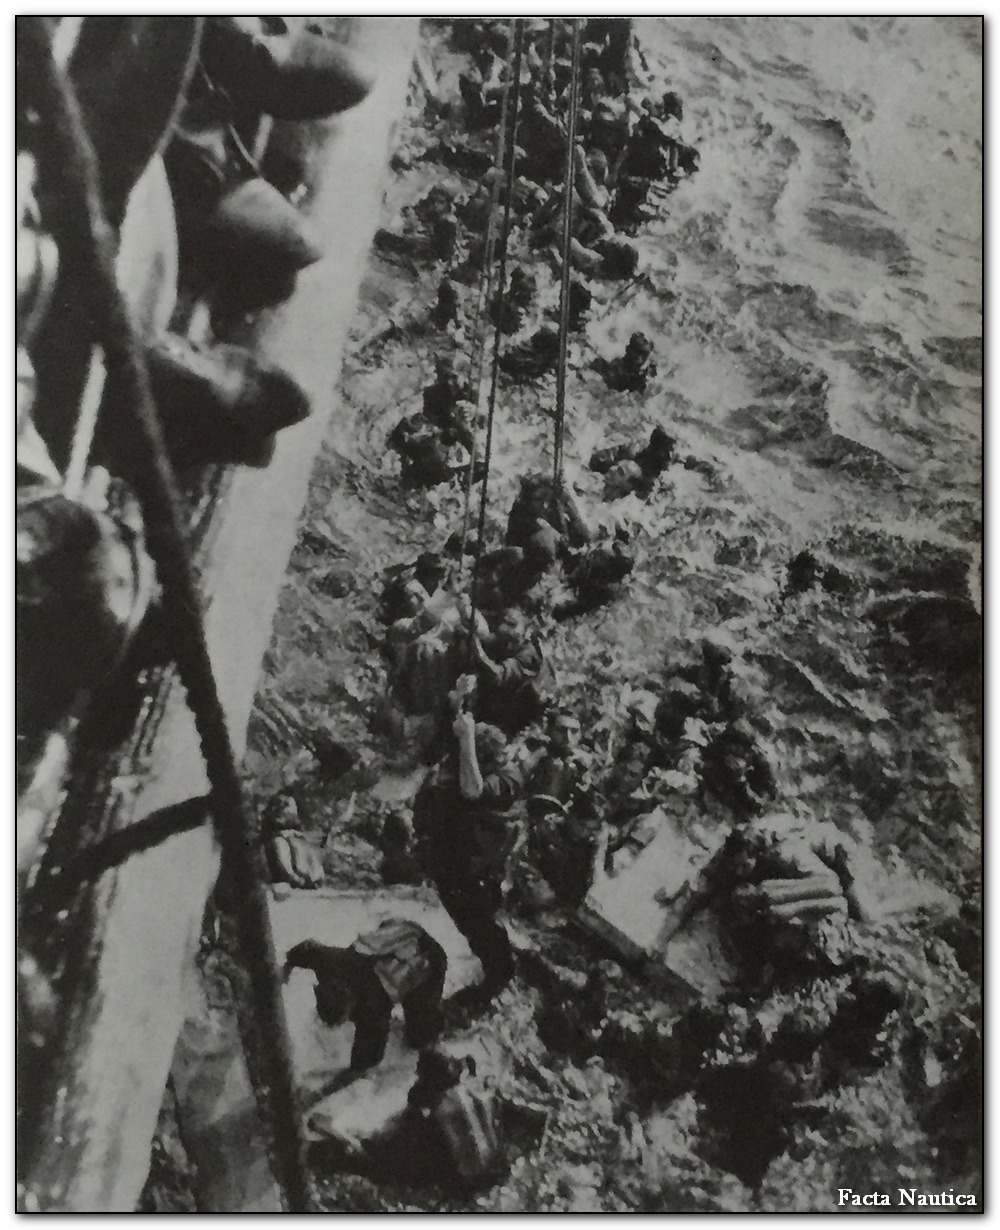 HMS DORSETSHIRE and survivors from BISMARCK.